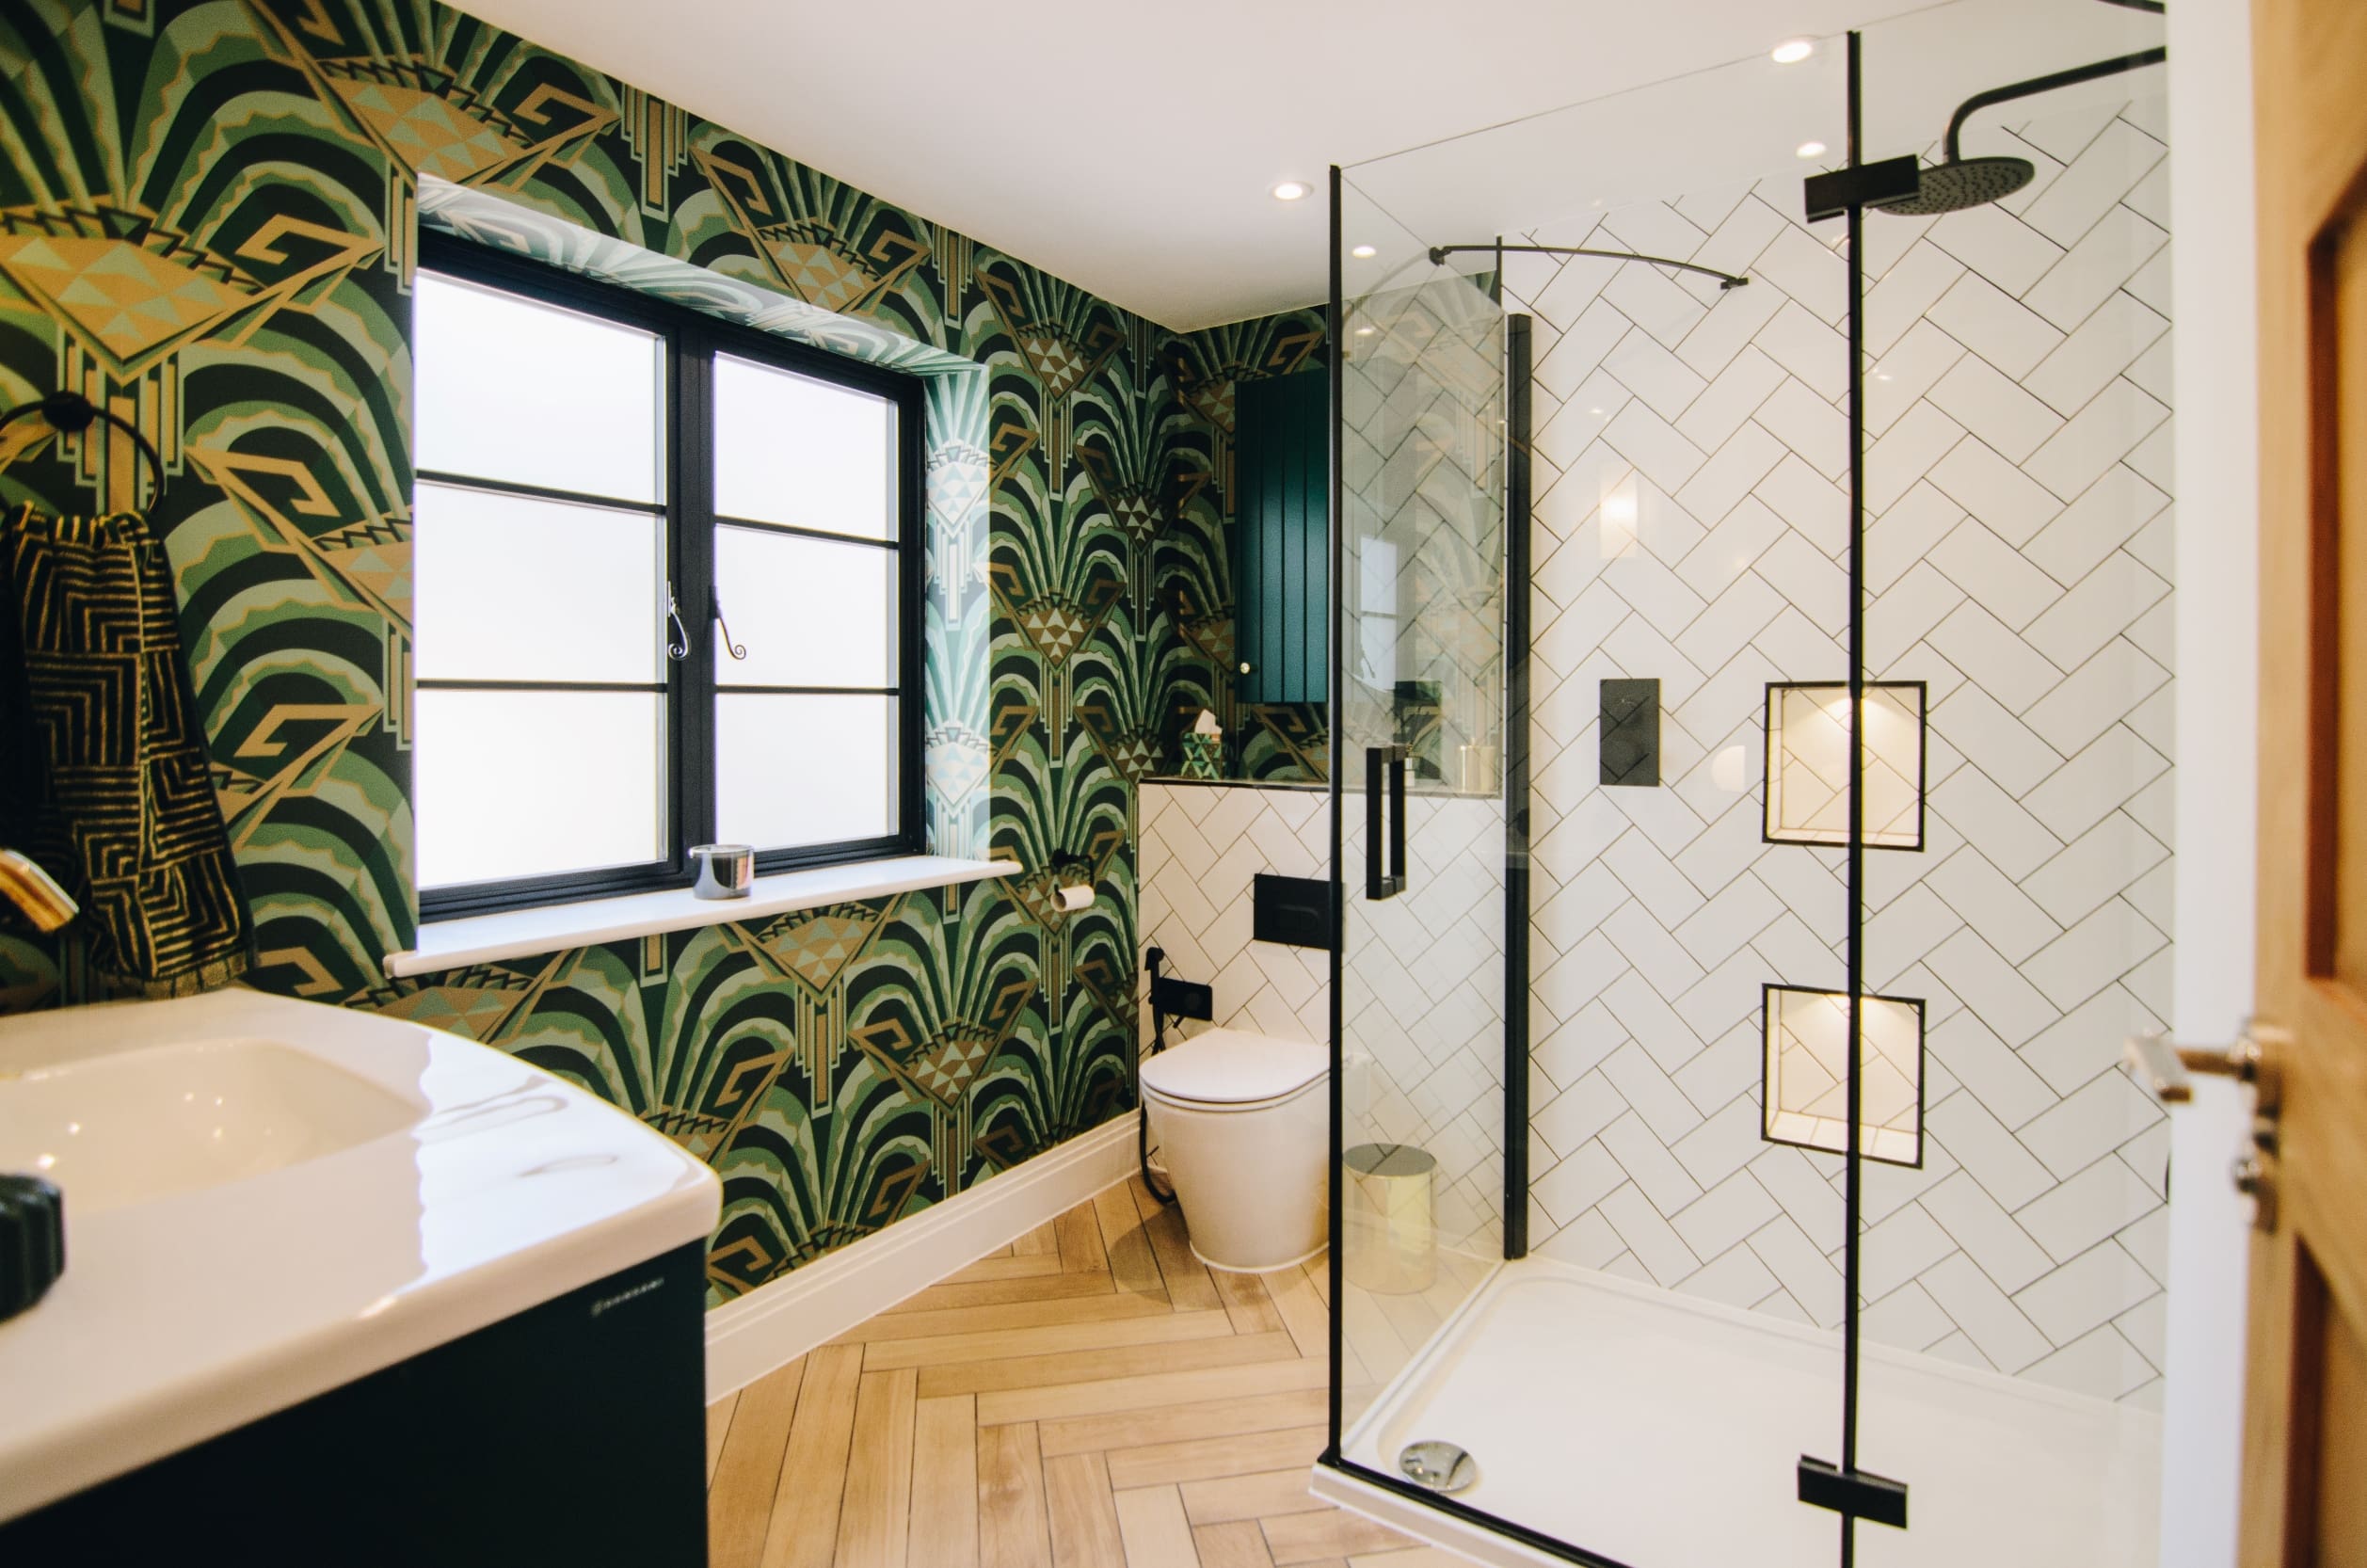 Art deco bathroom with herringbone wooden tiled floor and aluminium windows.